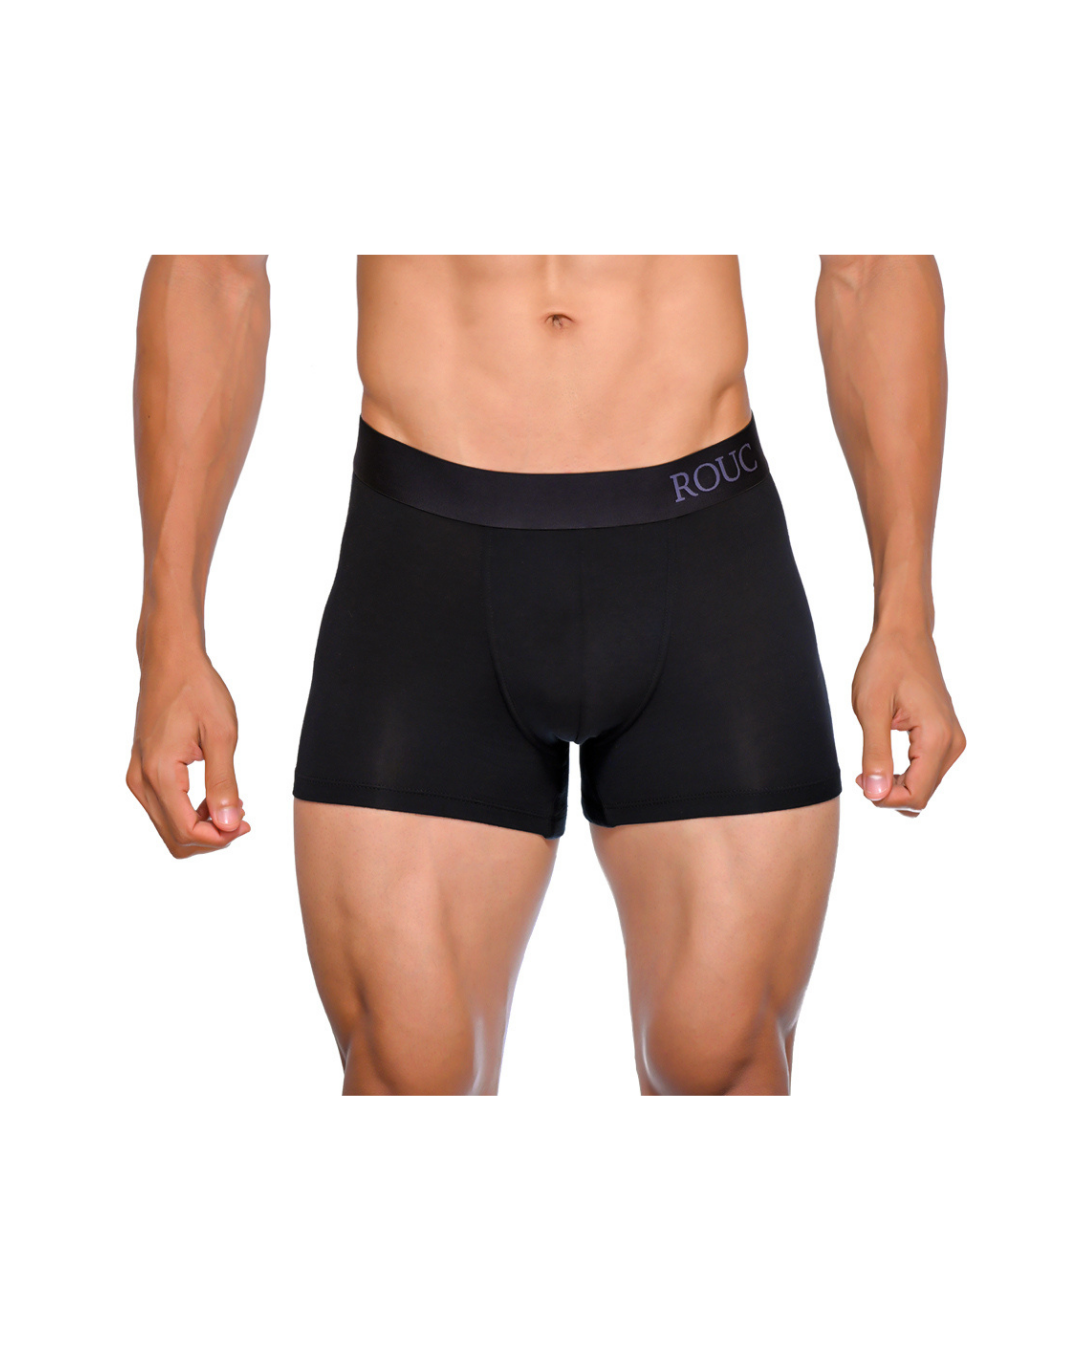 Men Underwear - TRUNKS - 2 Pack (Black & Black)